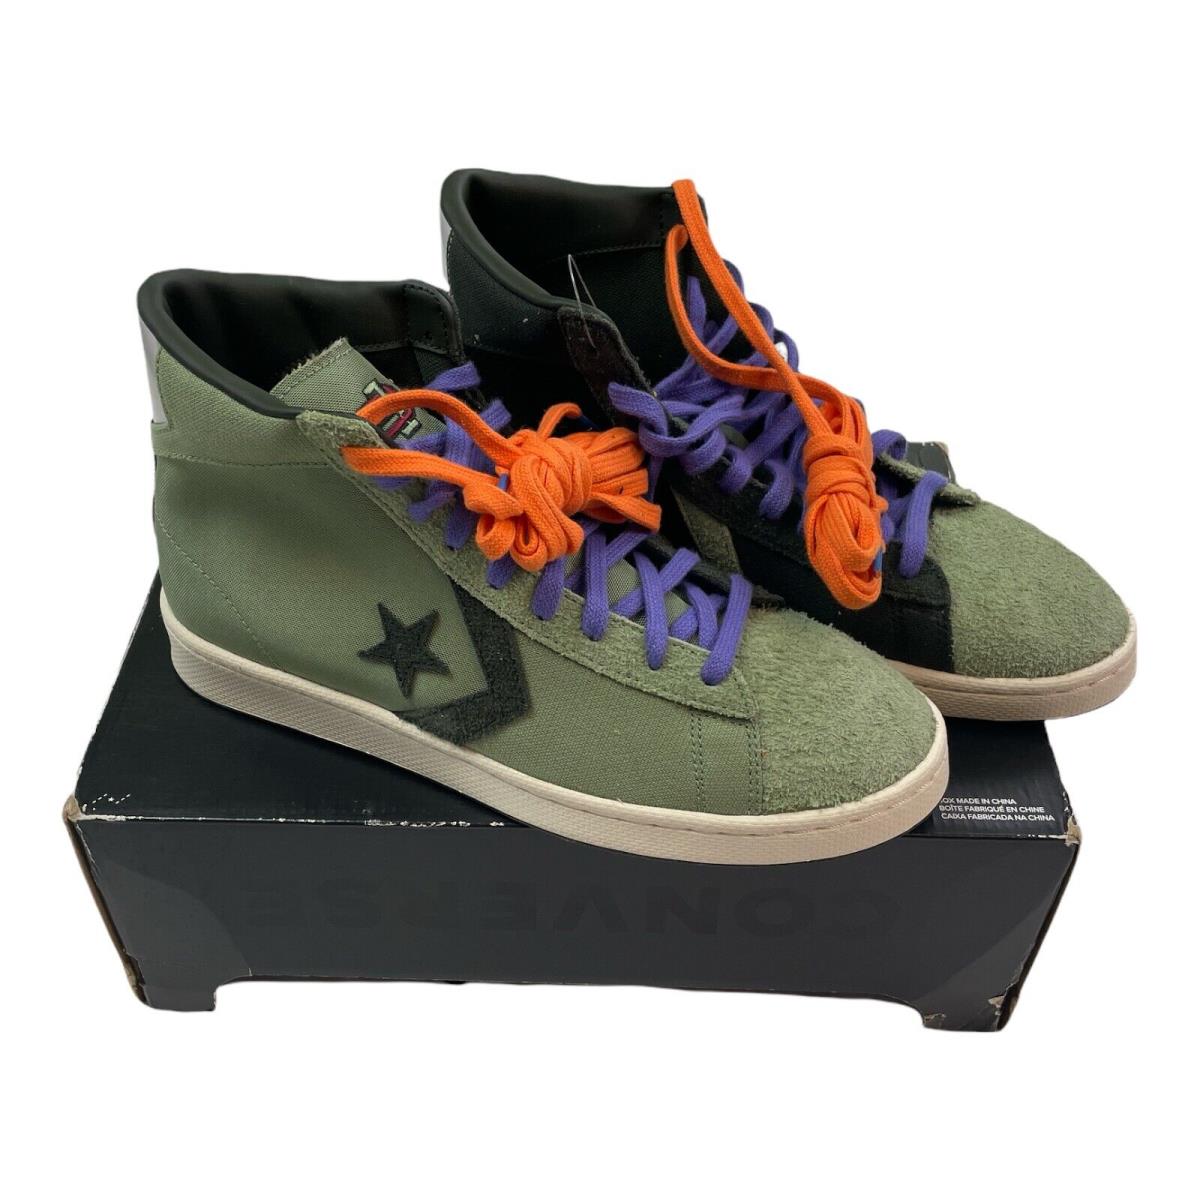 Converse Men`s Pro Leather Bhm Oil Green Sequoia Egret Shoes Size 9 168273C - Green